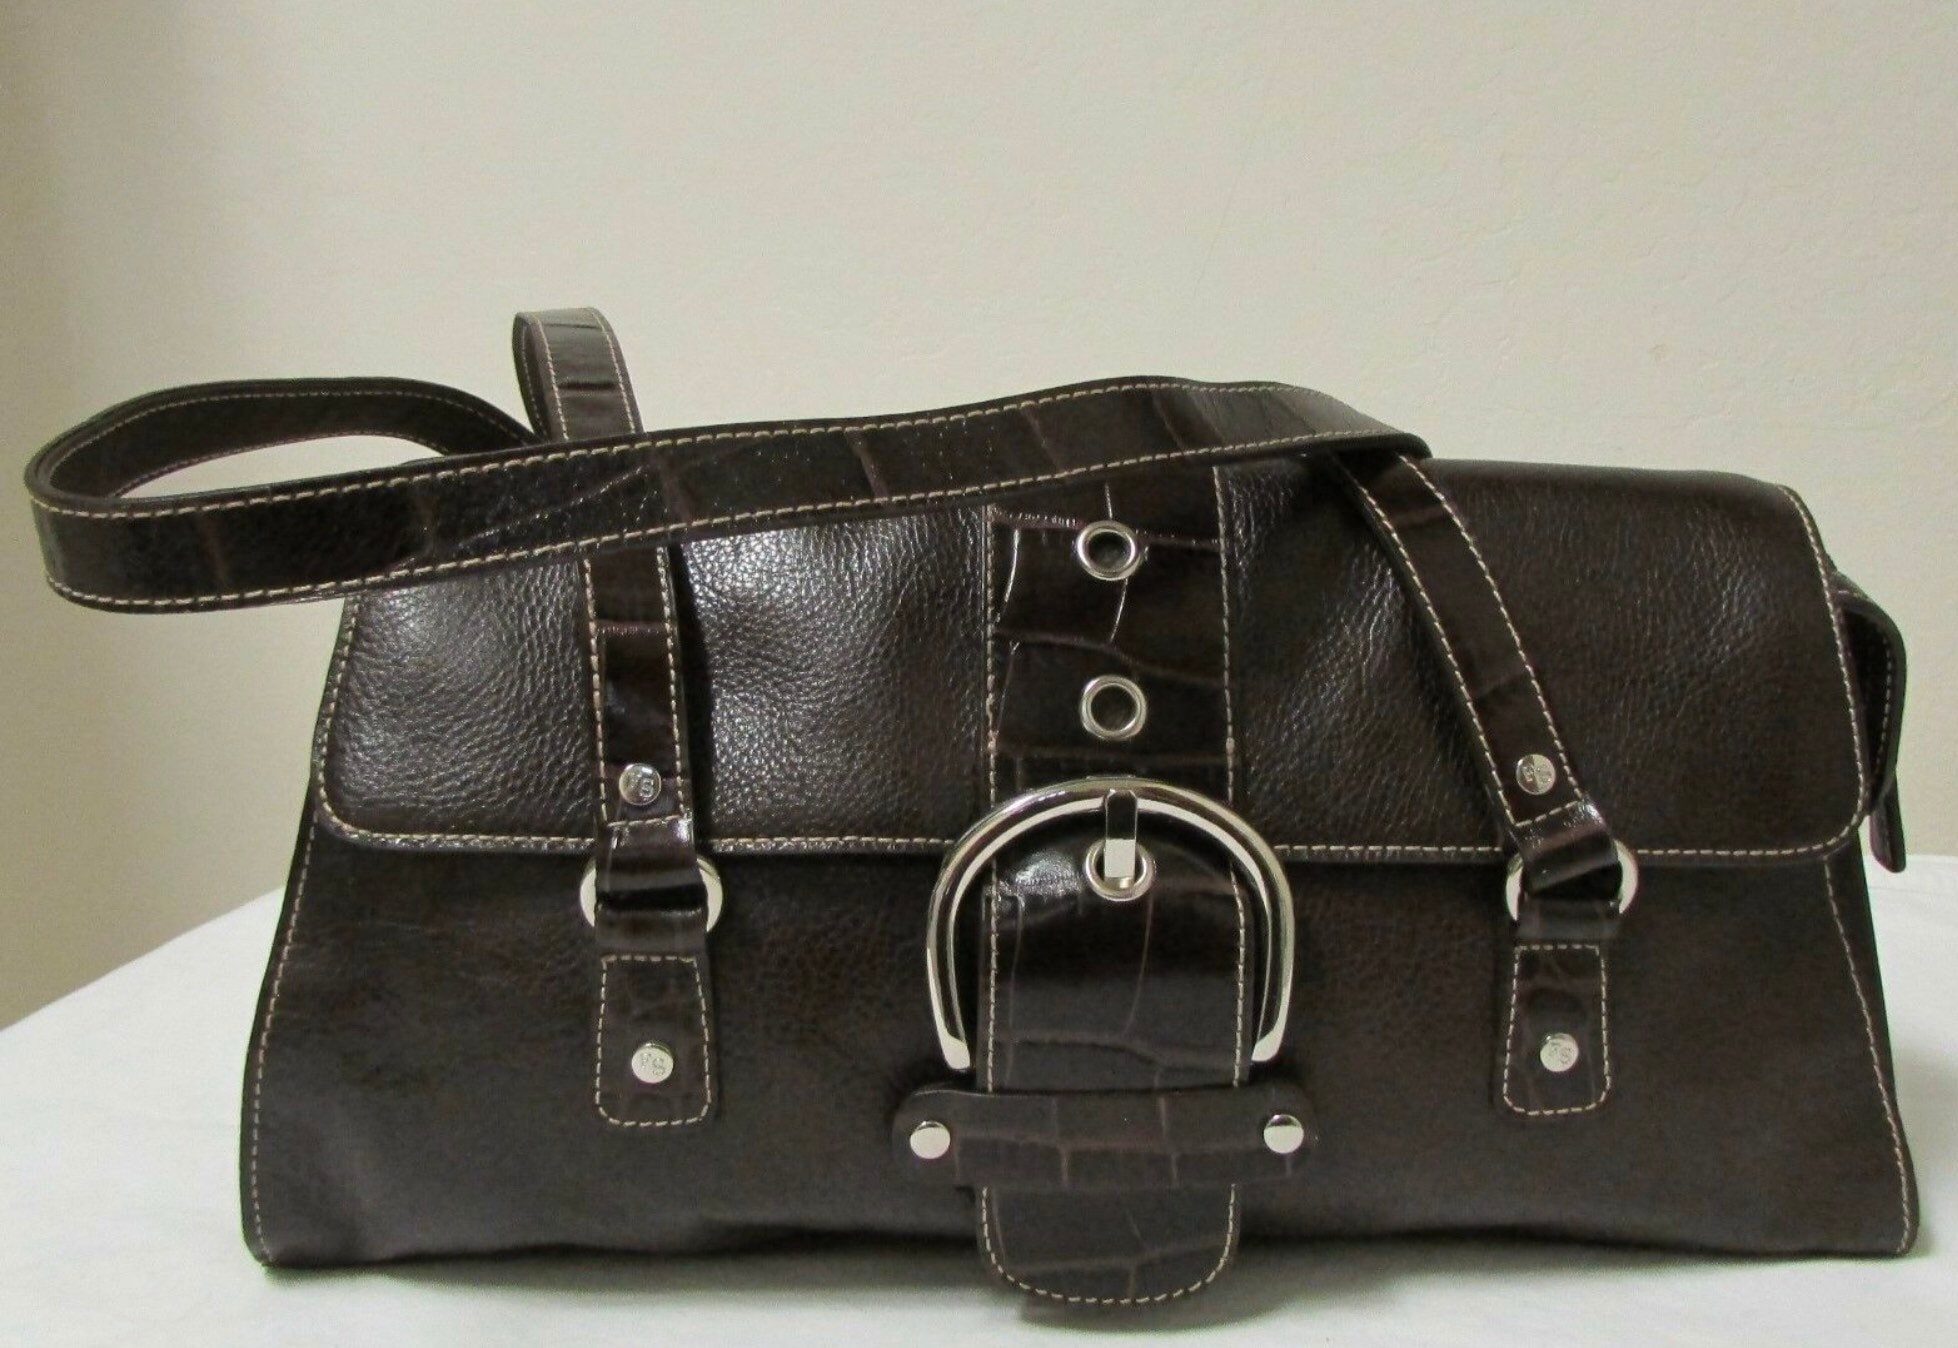 LOUIS STITCH Men Formal Black Genuine Leather Belt RC Golden - Price in  India